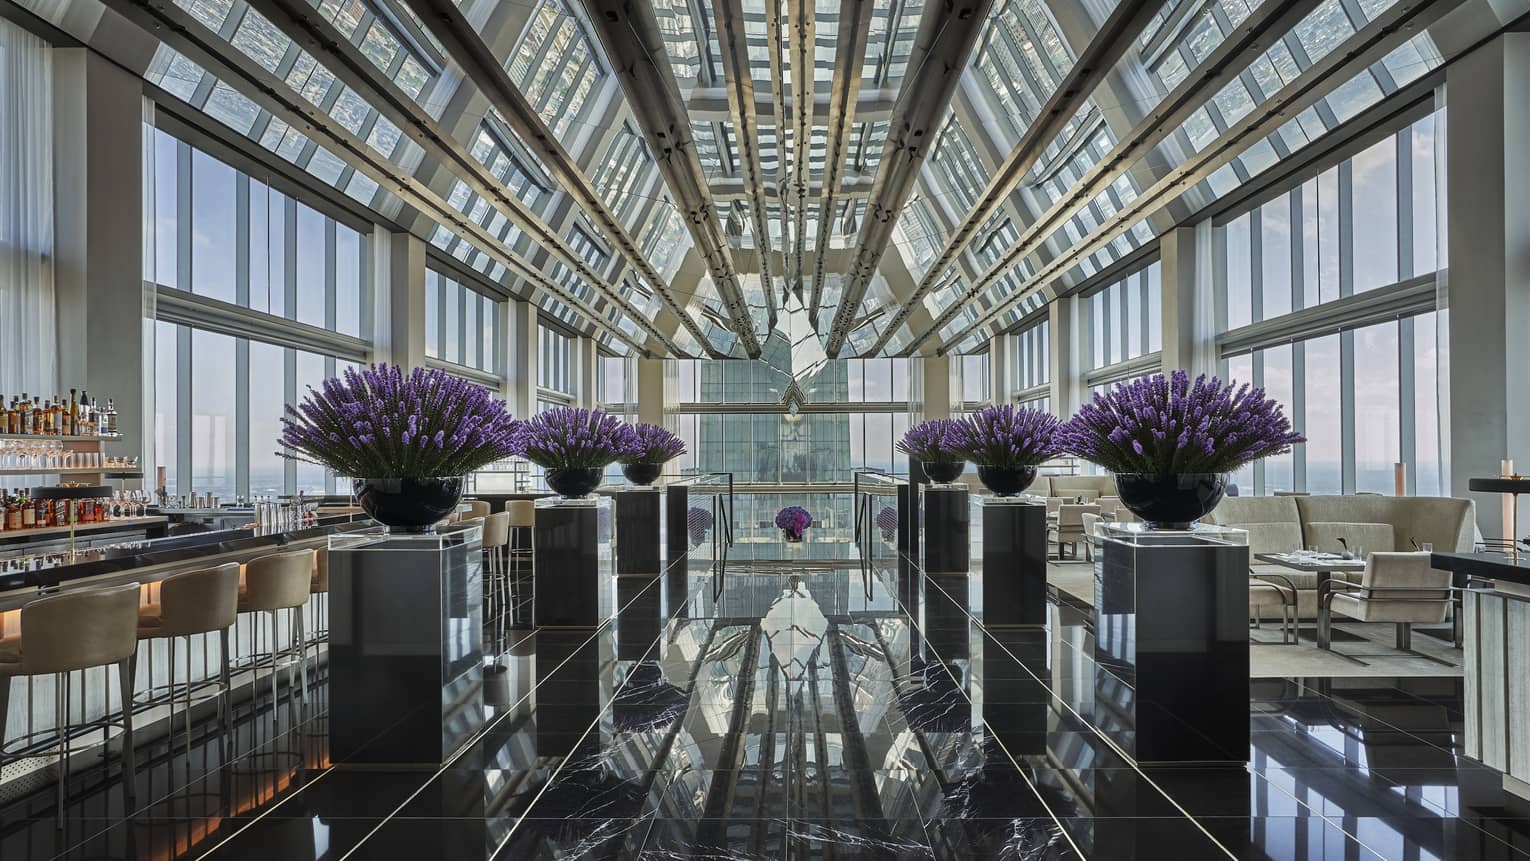 Bar beside purple flowers in black planters, marble floor under glass loft penthouse ceiling